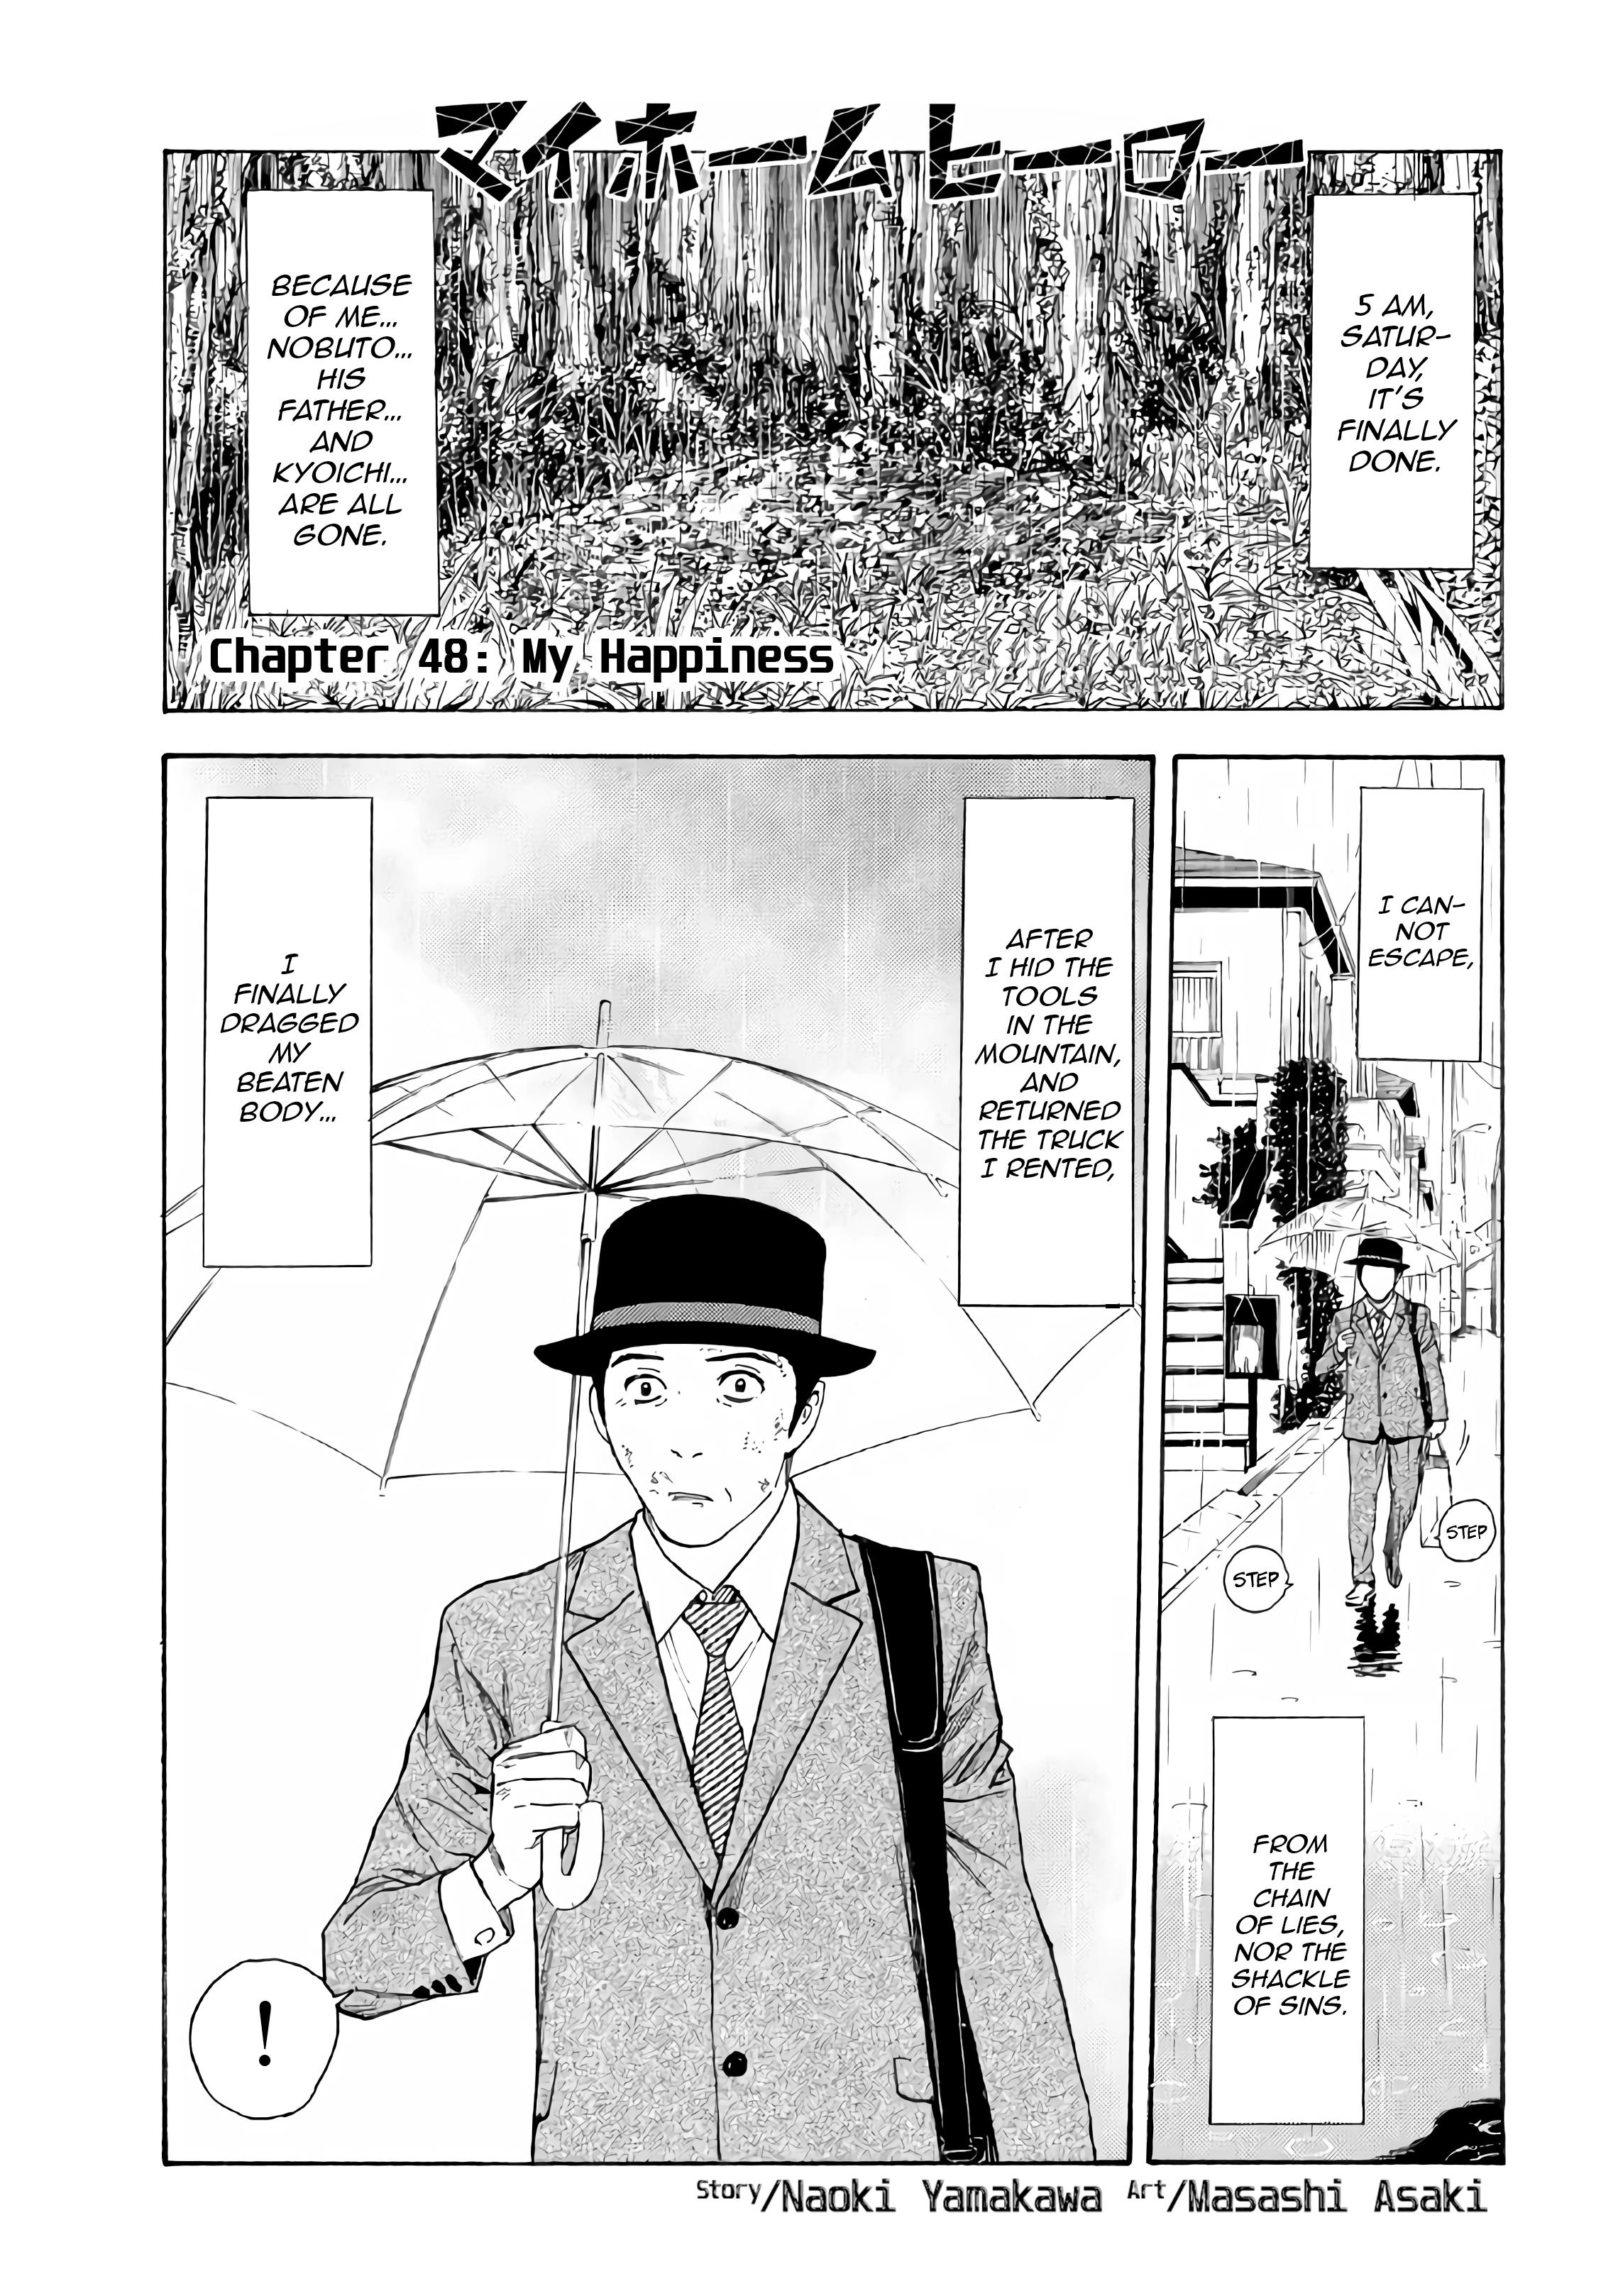 Read My Home Hero Chapter 186 on Mangakakalot